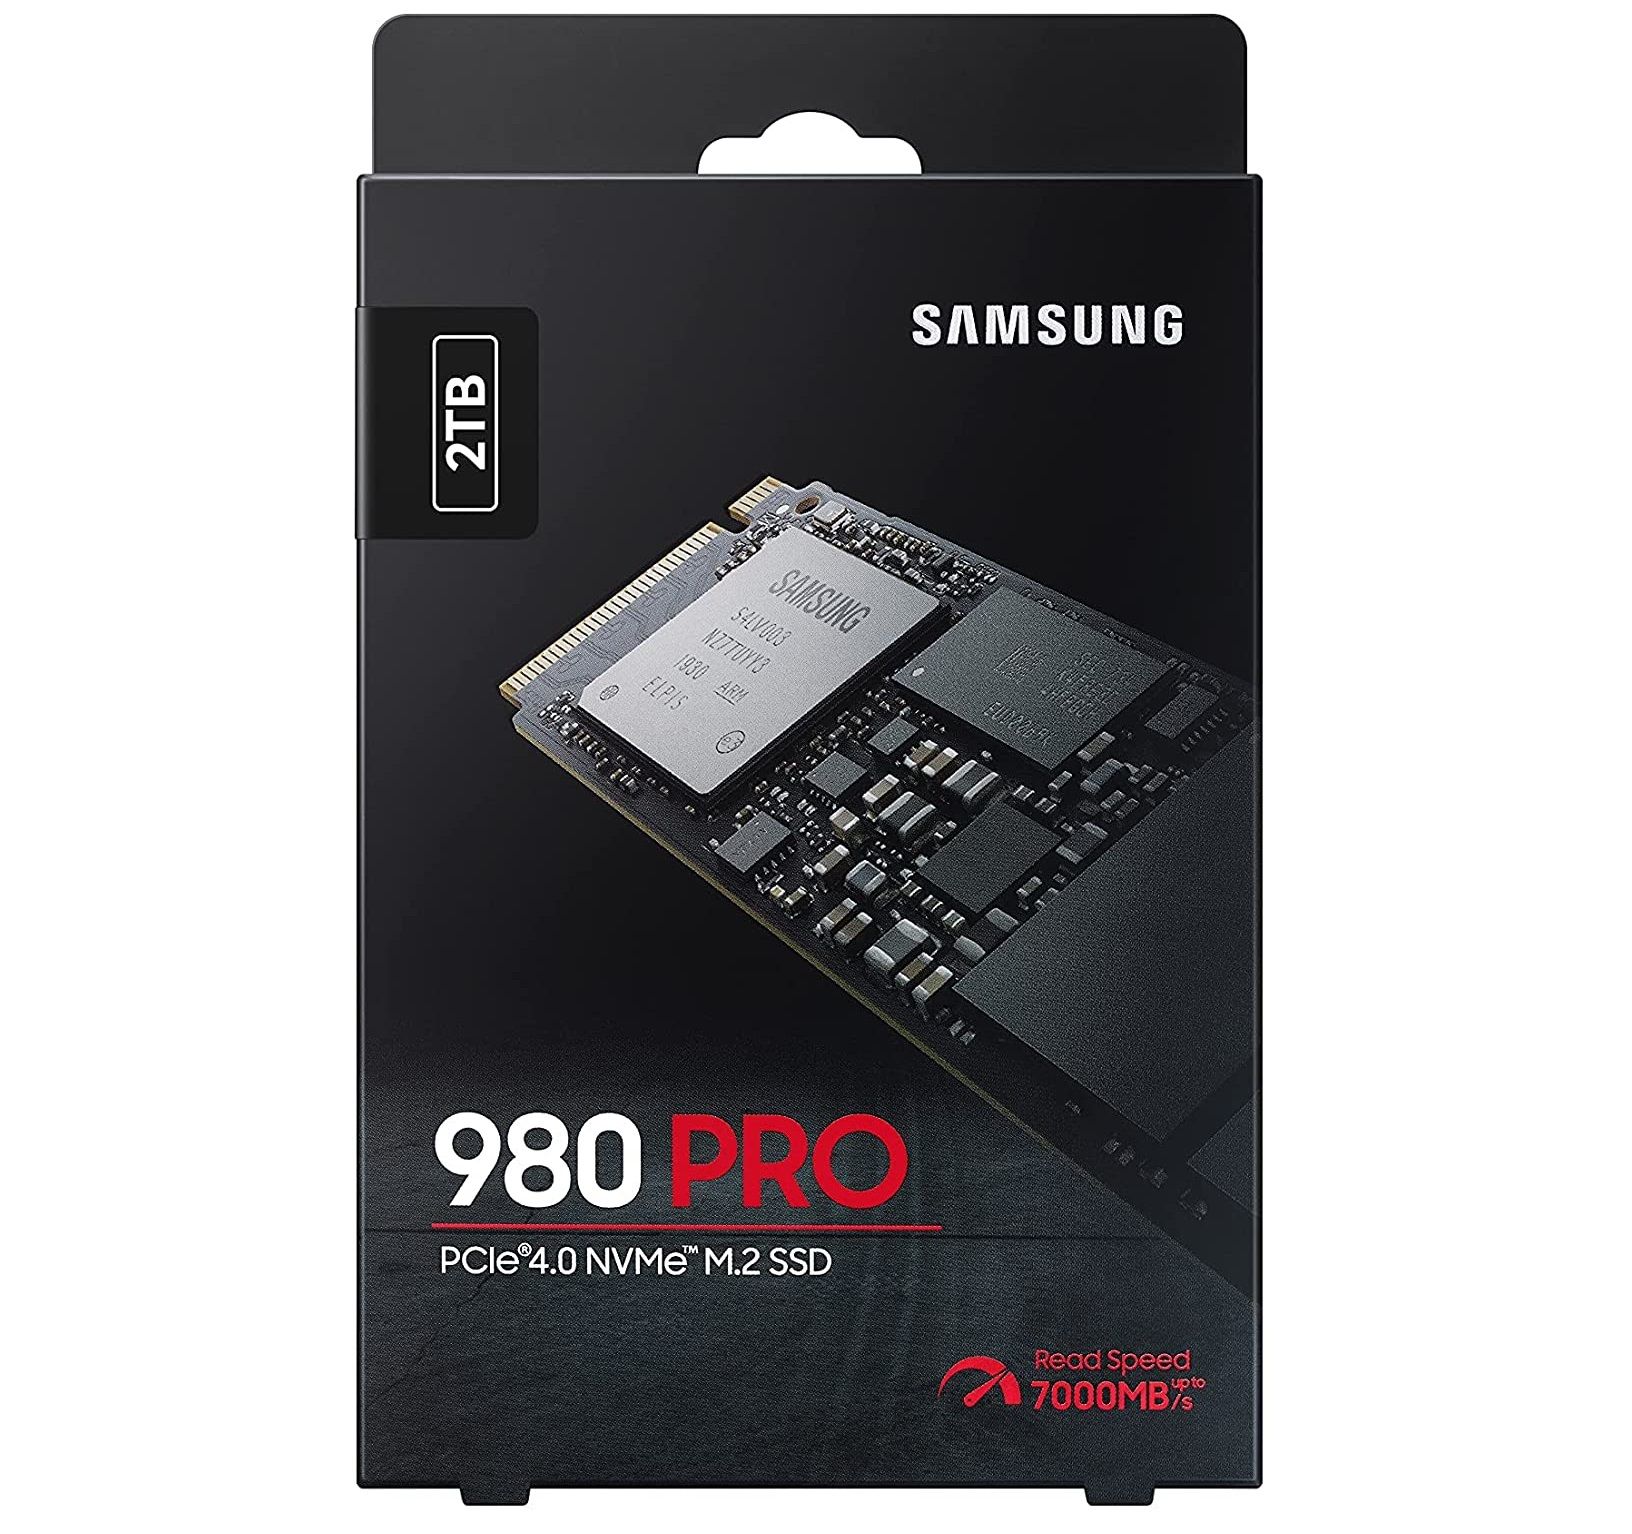 SAMSUNG 980 PRO SSD PBI-1